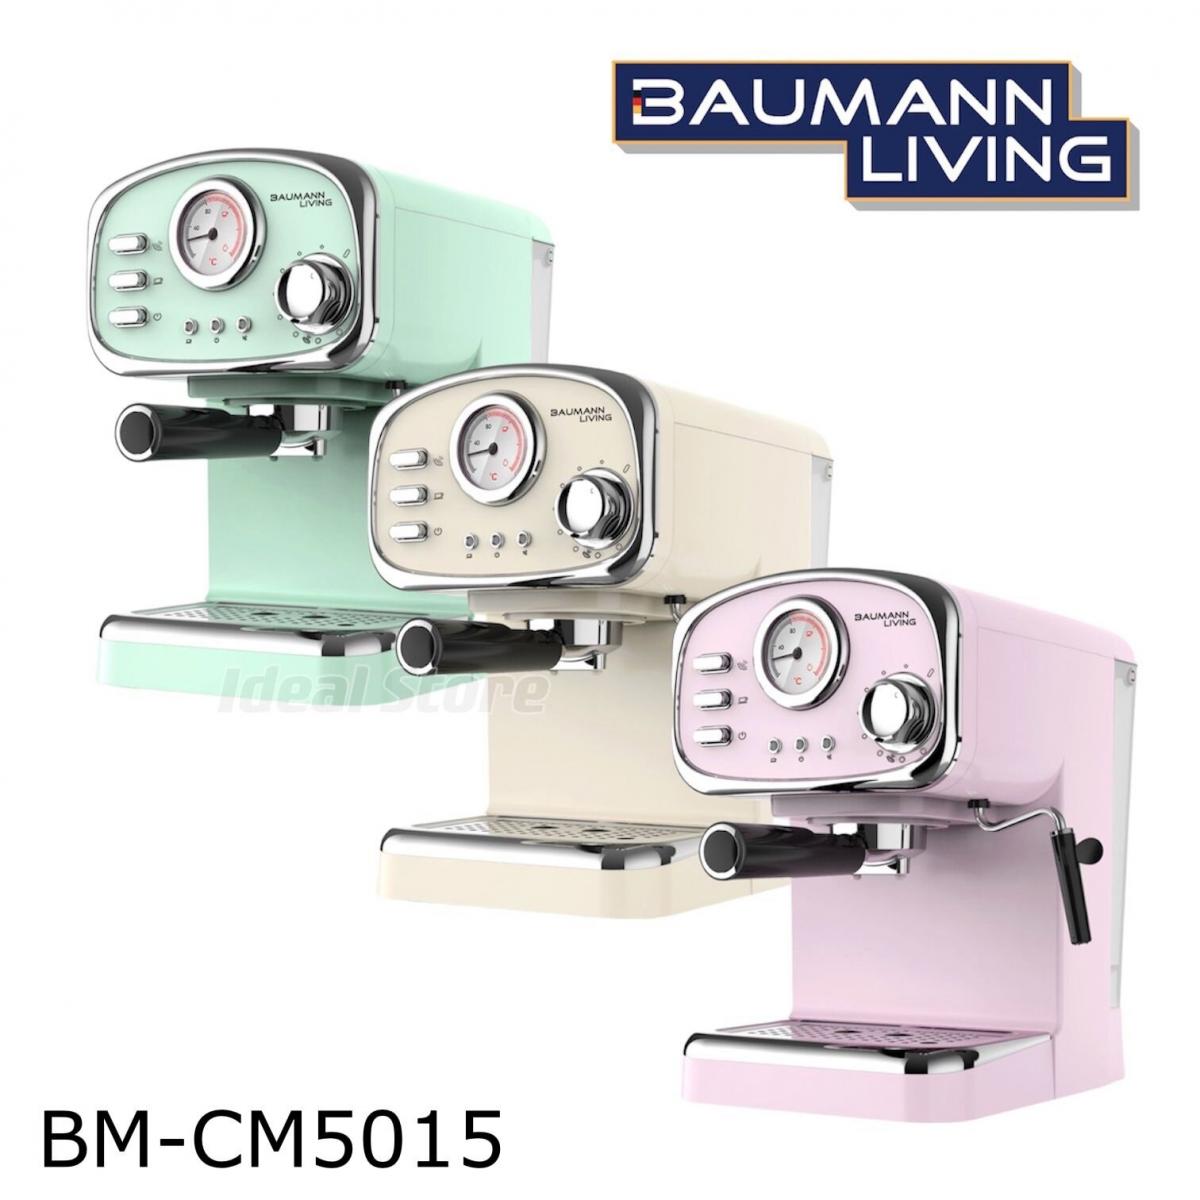 Baumann Living - Retro Espresso Machine 復古意式特濃咖啡機連打奶器｜家用小型半自動咖啡機 BM-CM5015GS